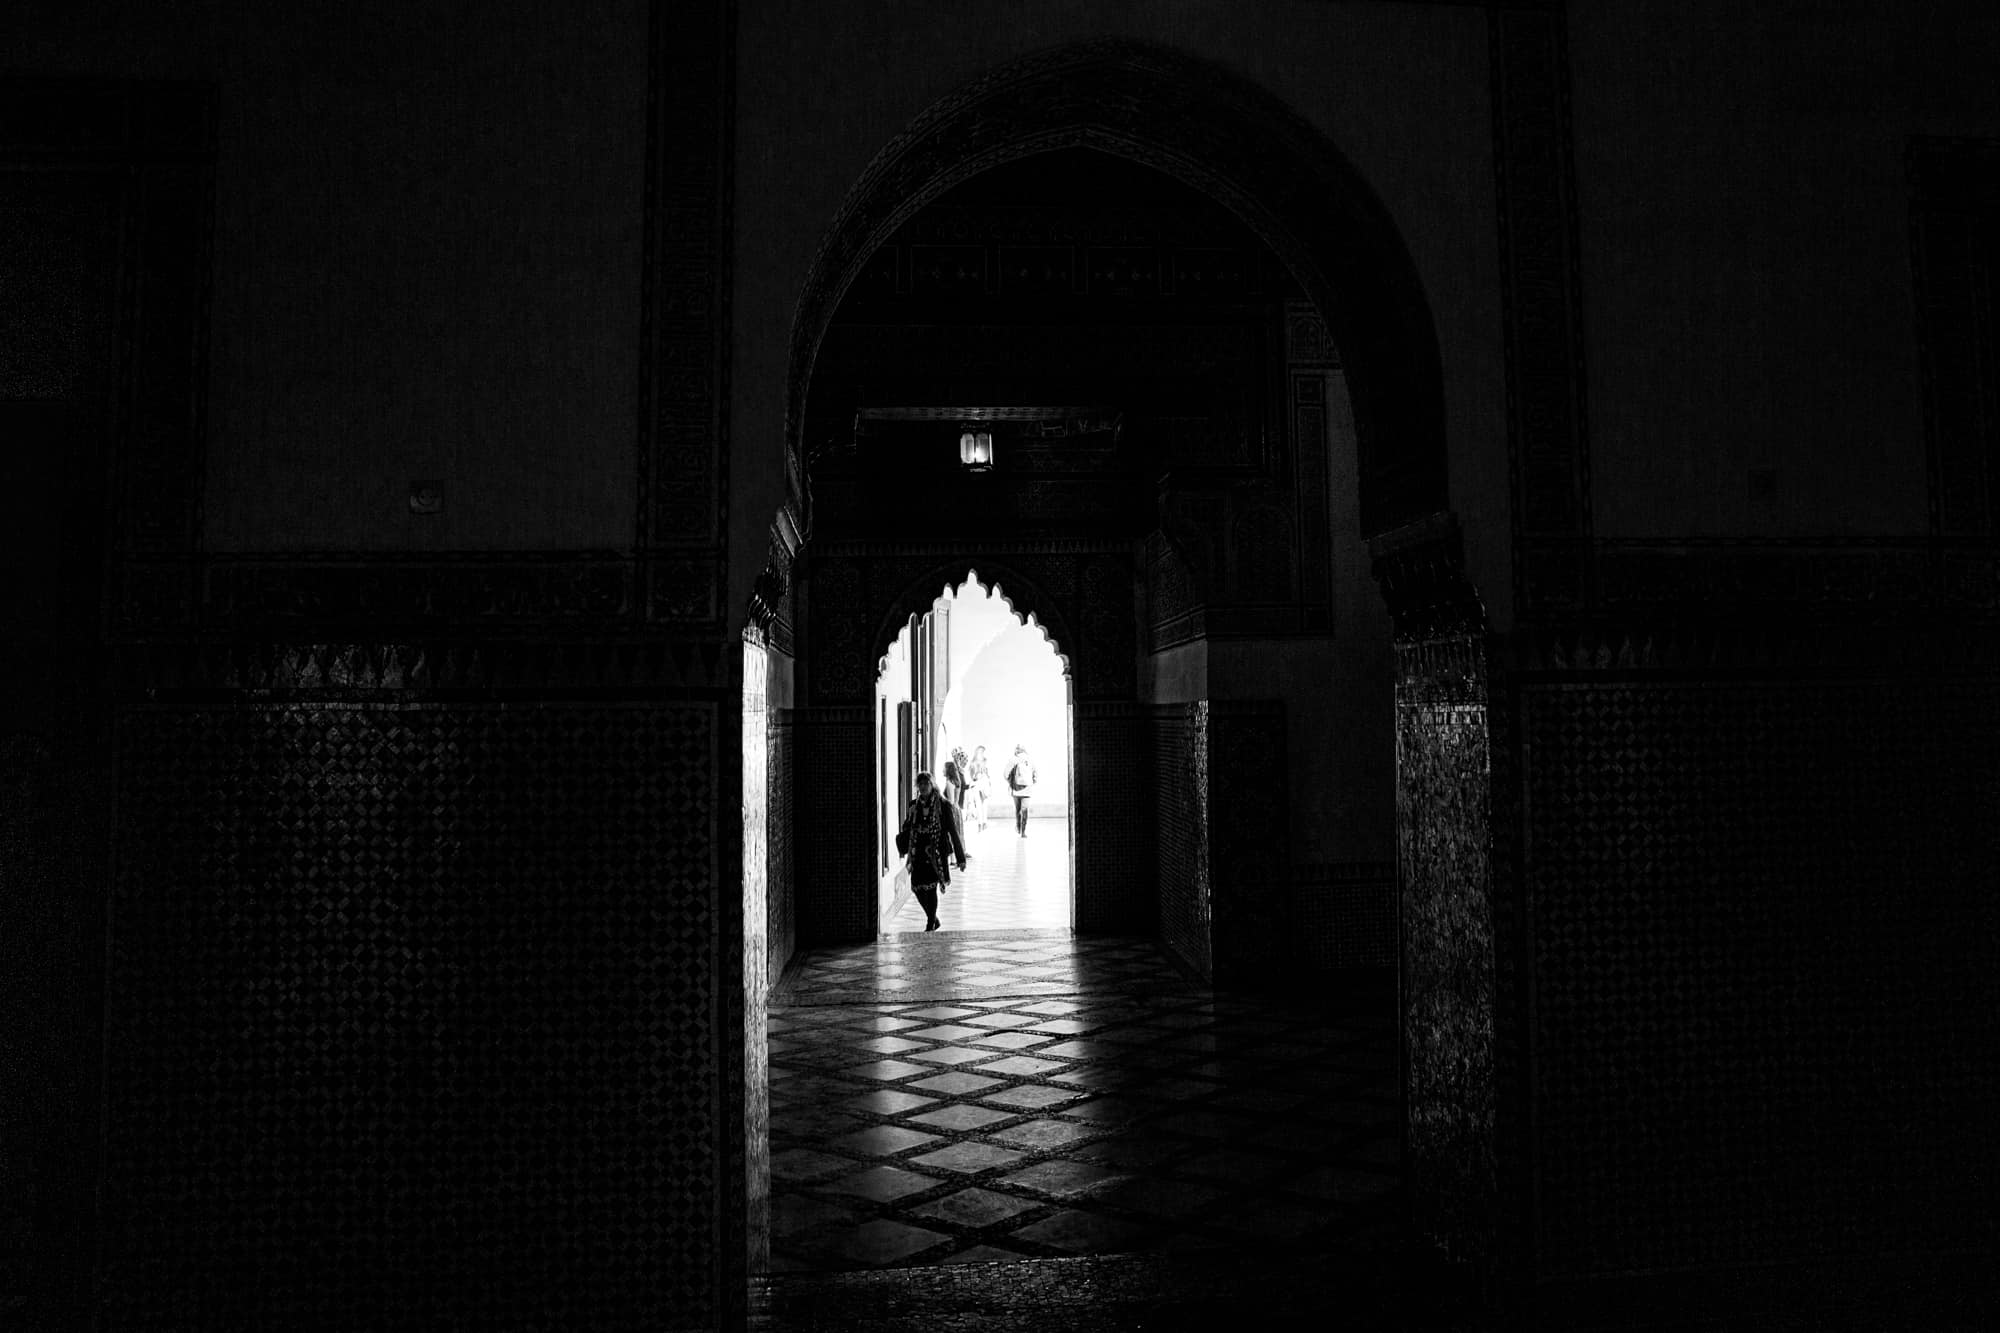 Bahia Palace, Marrakesh